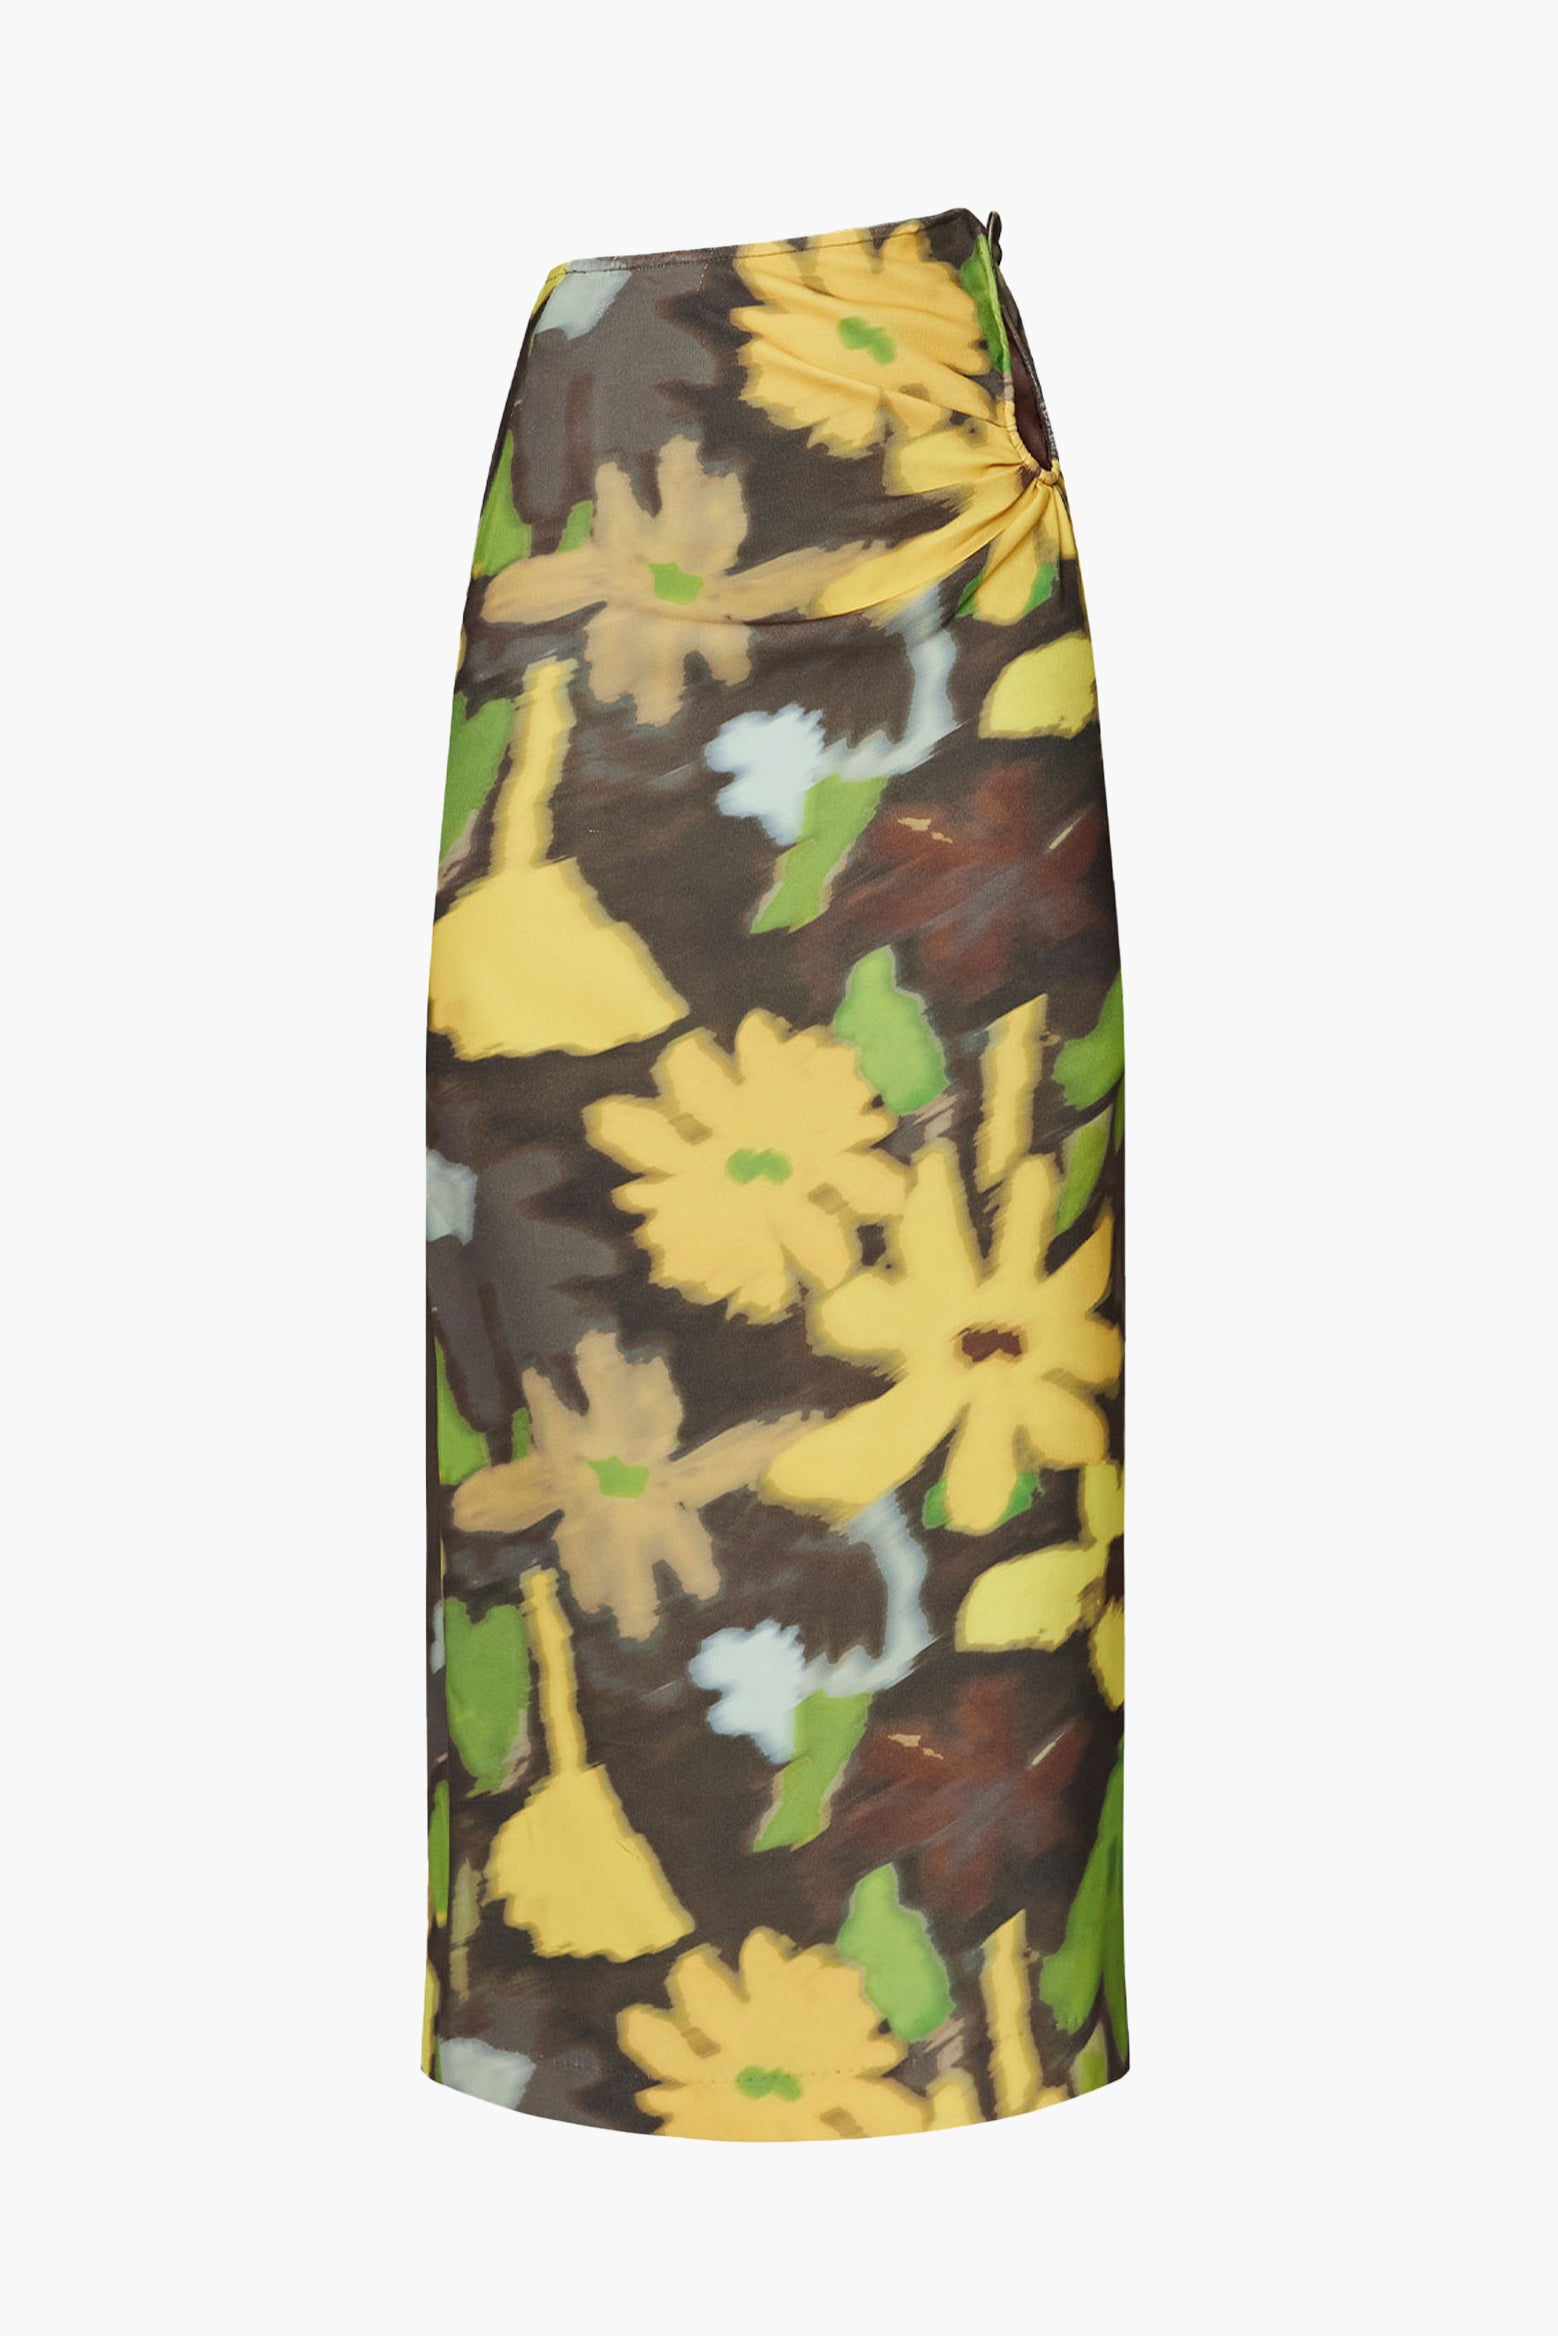 Wynn Hamlyn Ella Maxi Skirt in Acid Flowers available at The New Trend Australia.